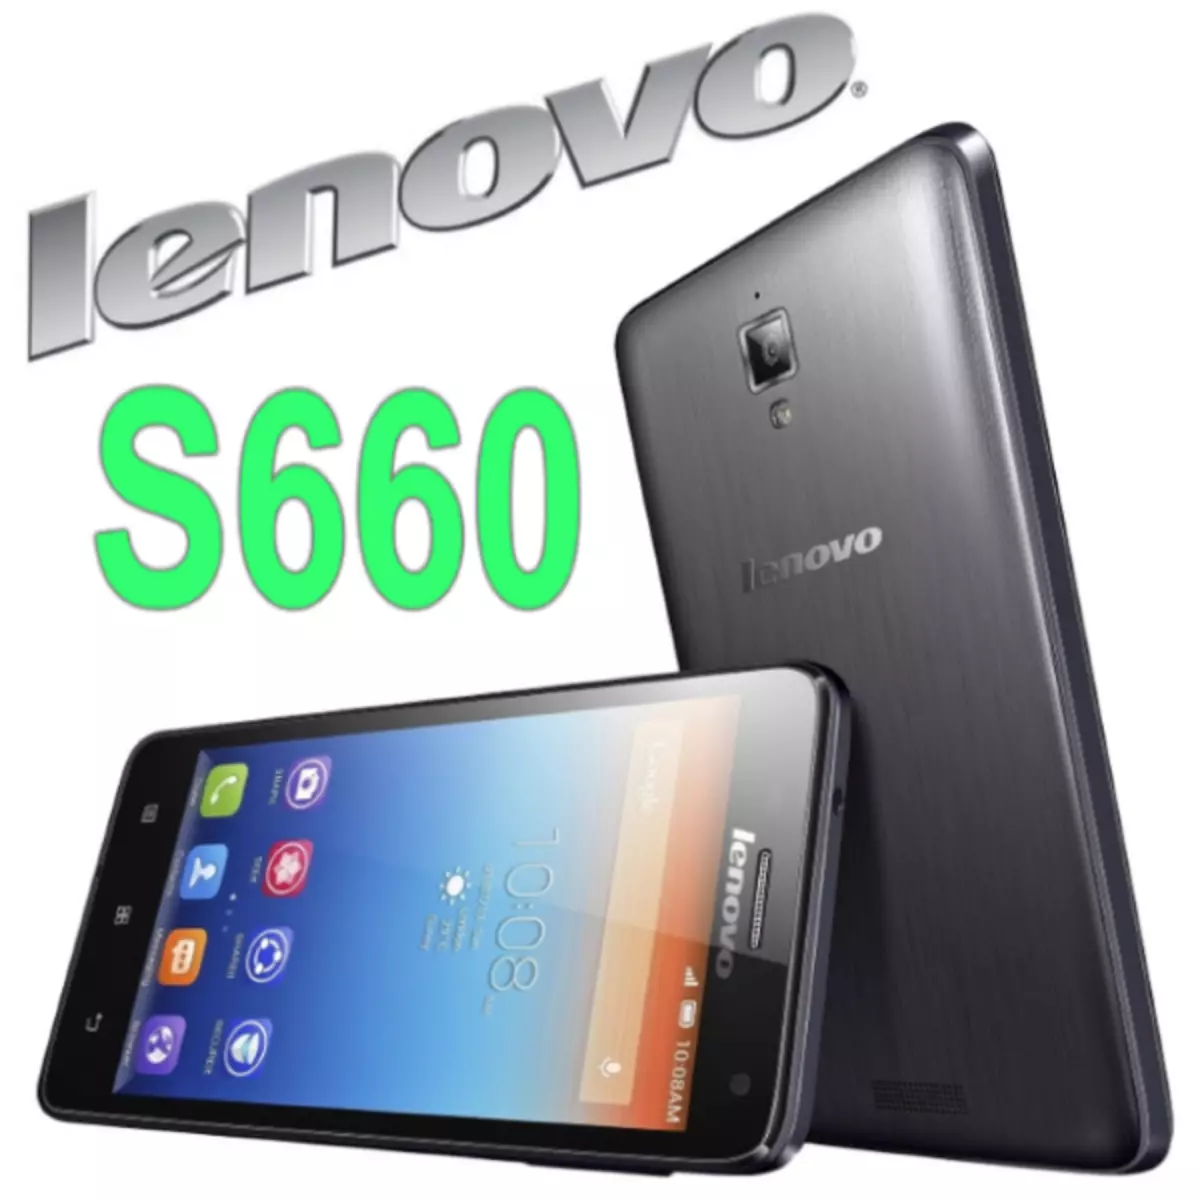 Firmware Lenovo S660.